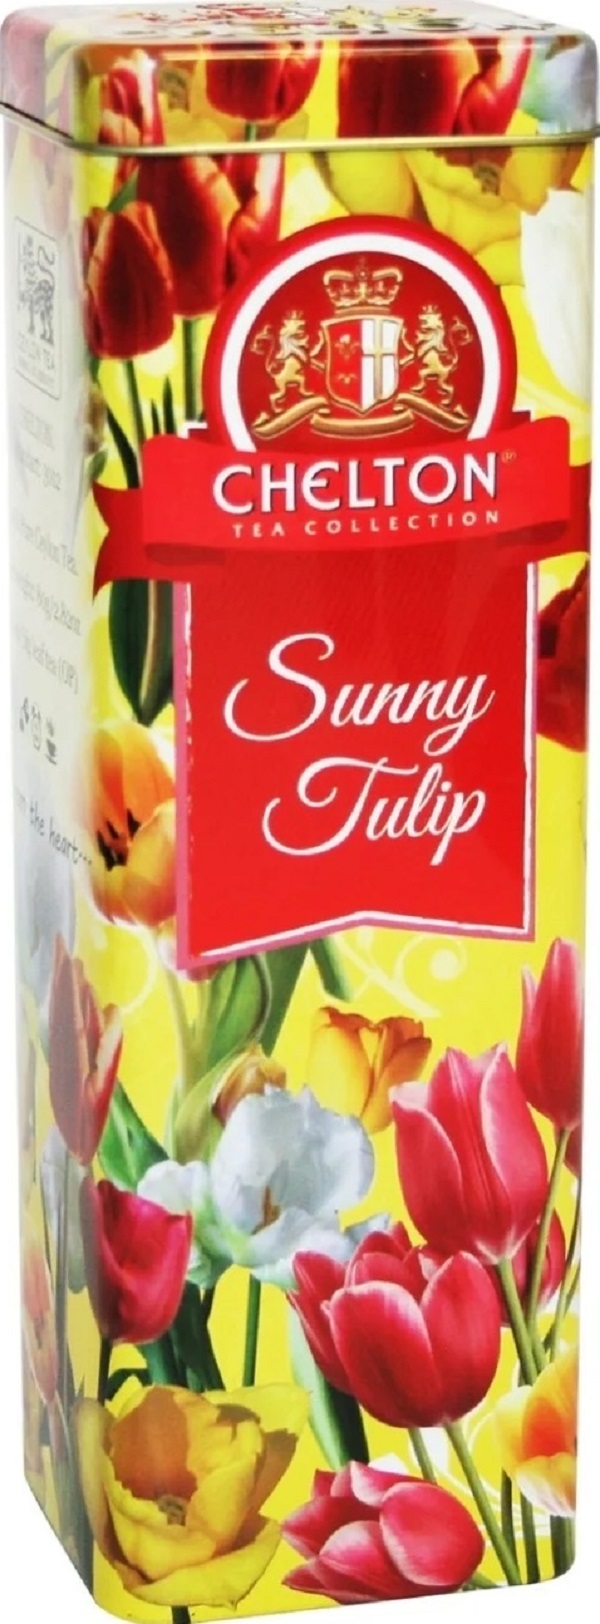 Ceai negru in cutie metalica: Sunny Tulip